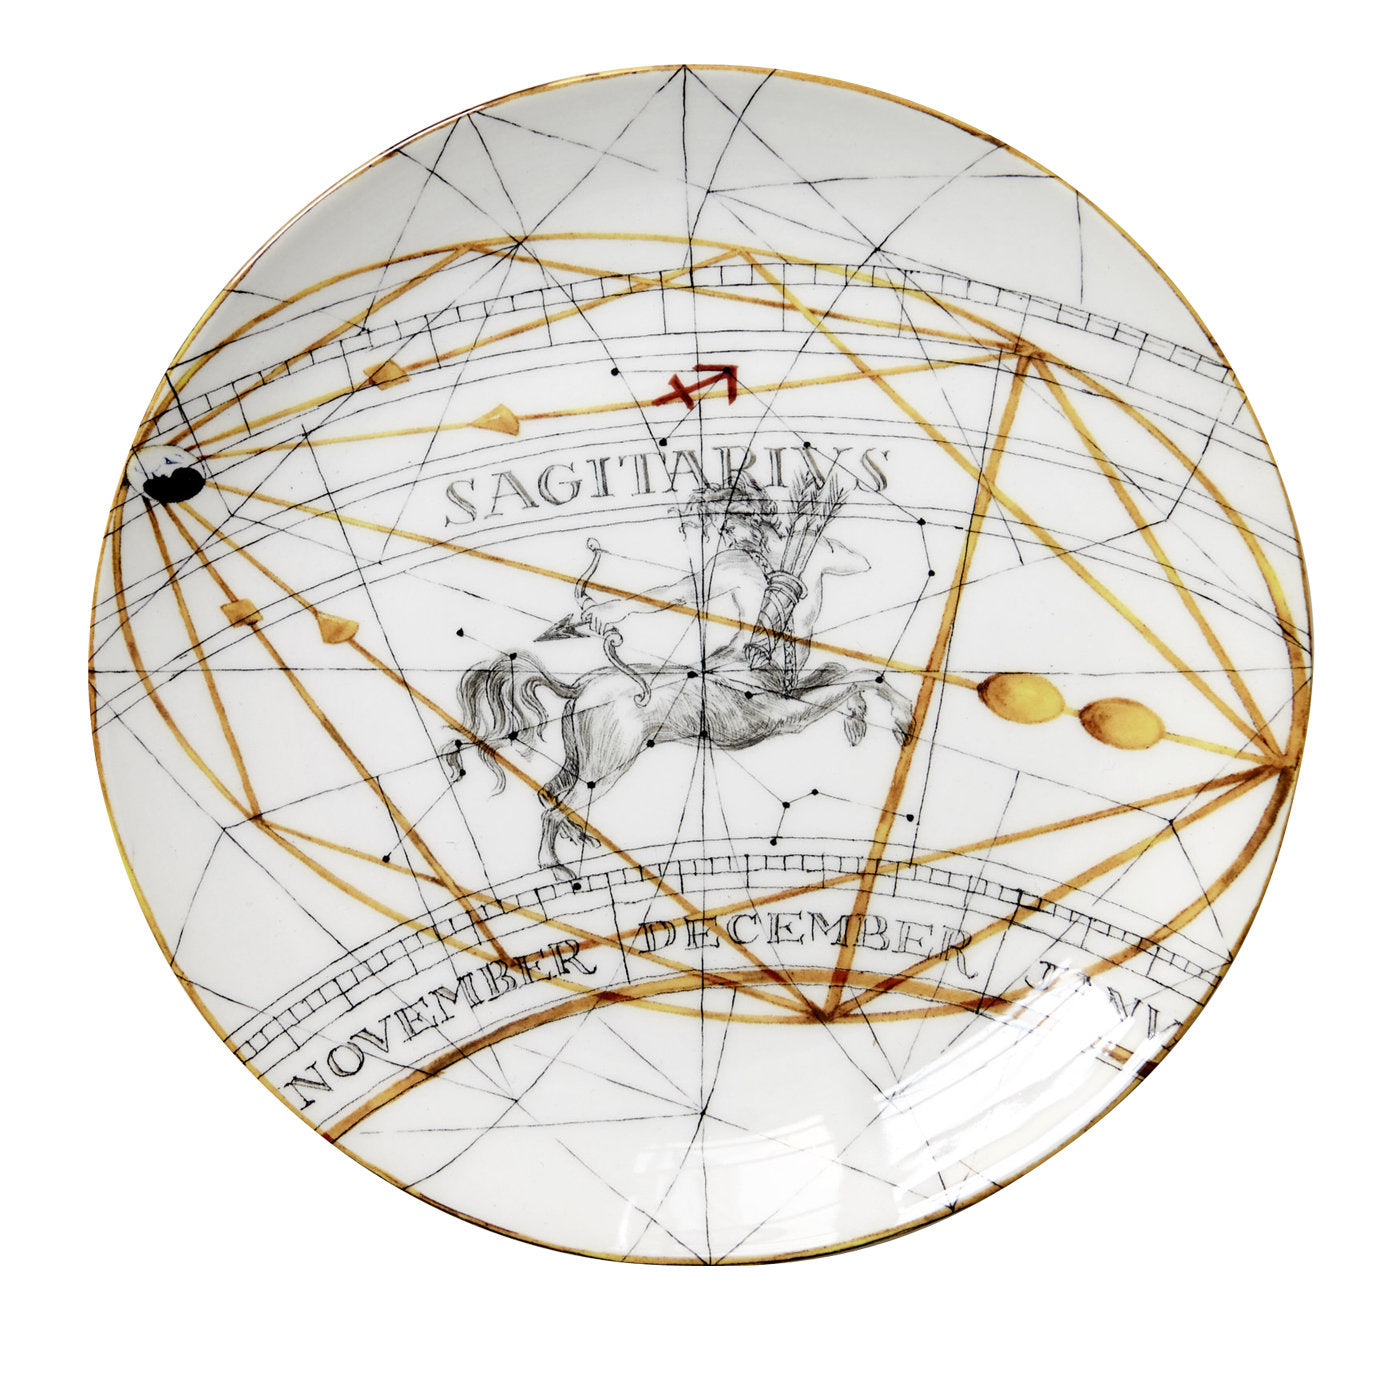 Zodiaco Sagittarius Dinner Plate - Main view